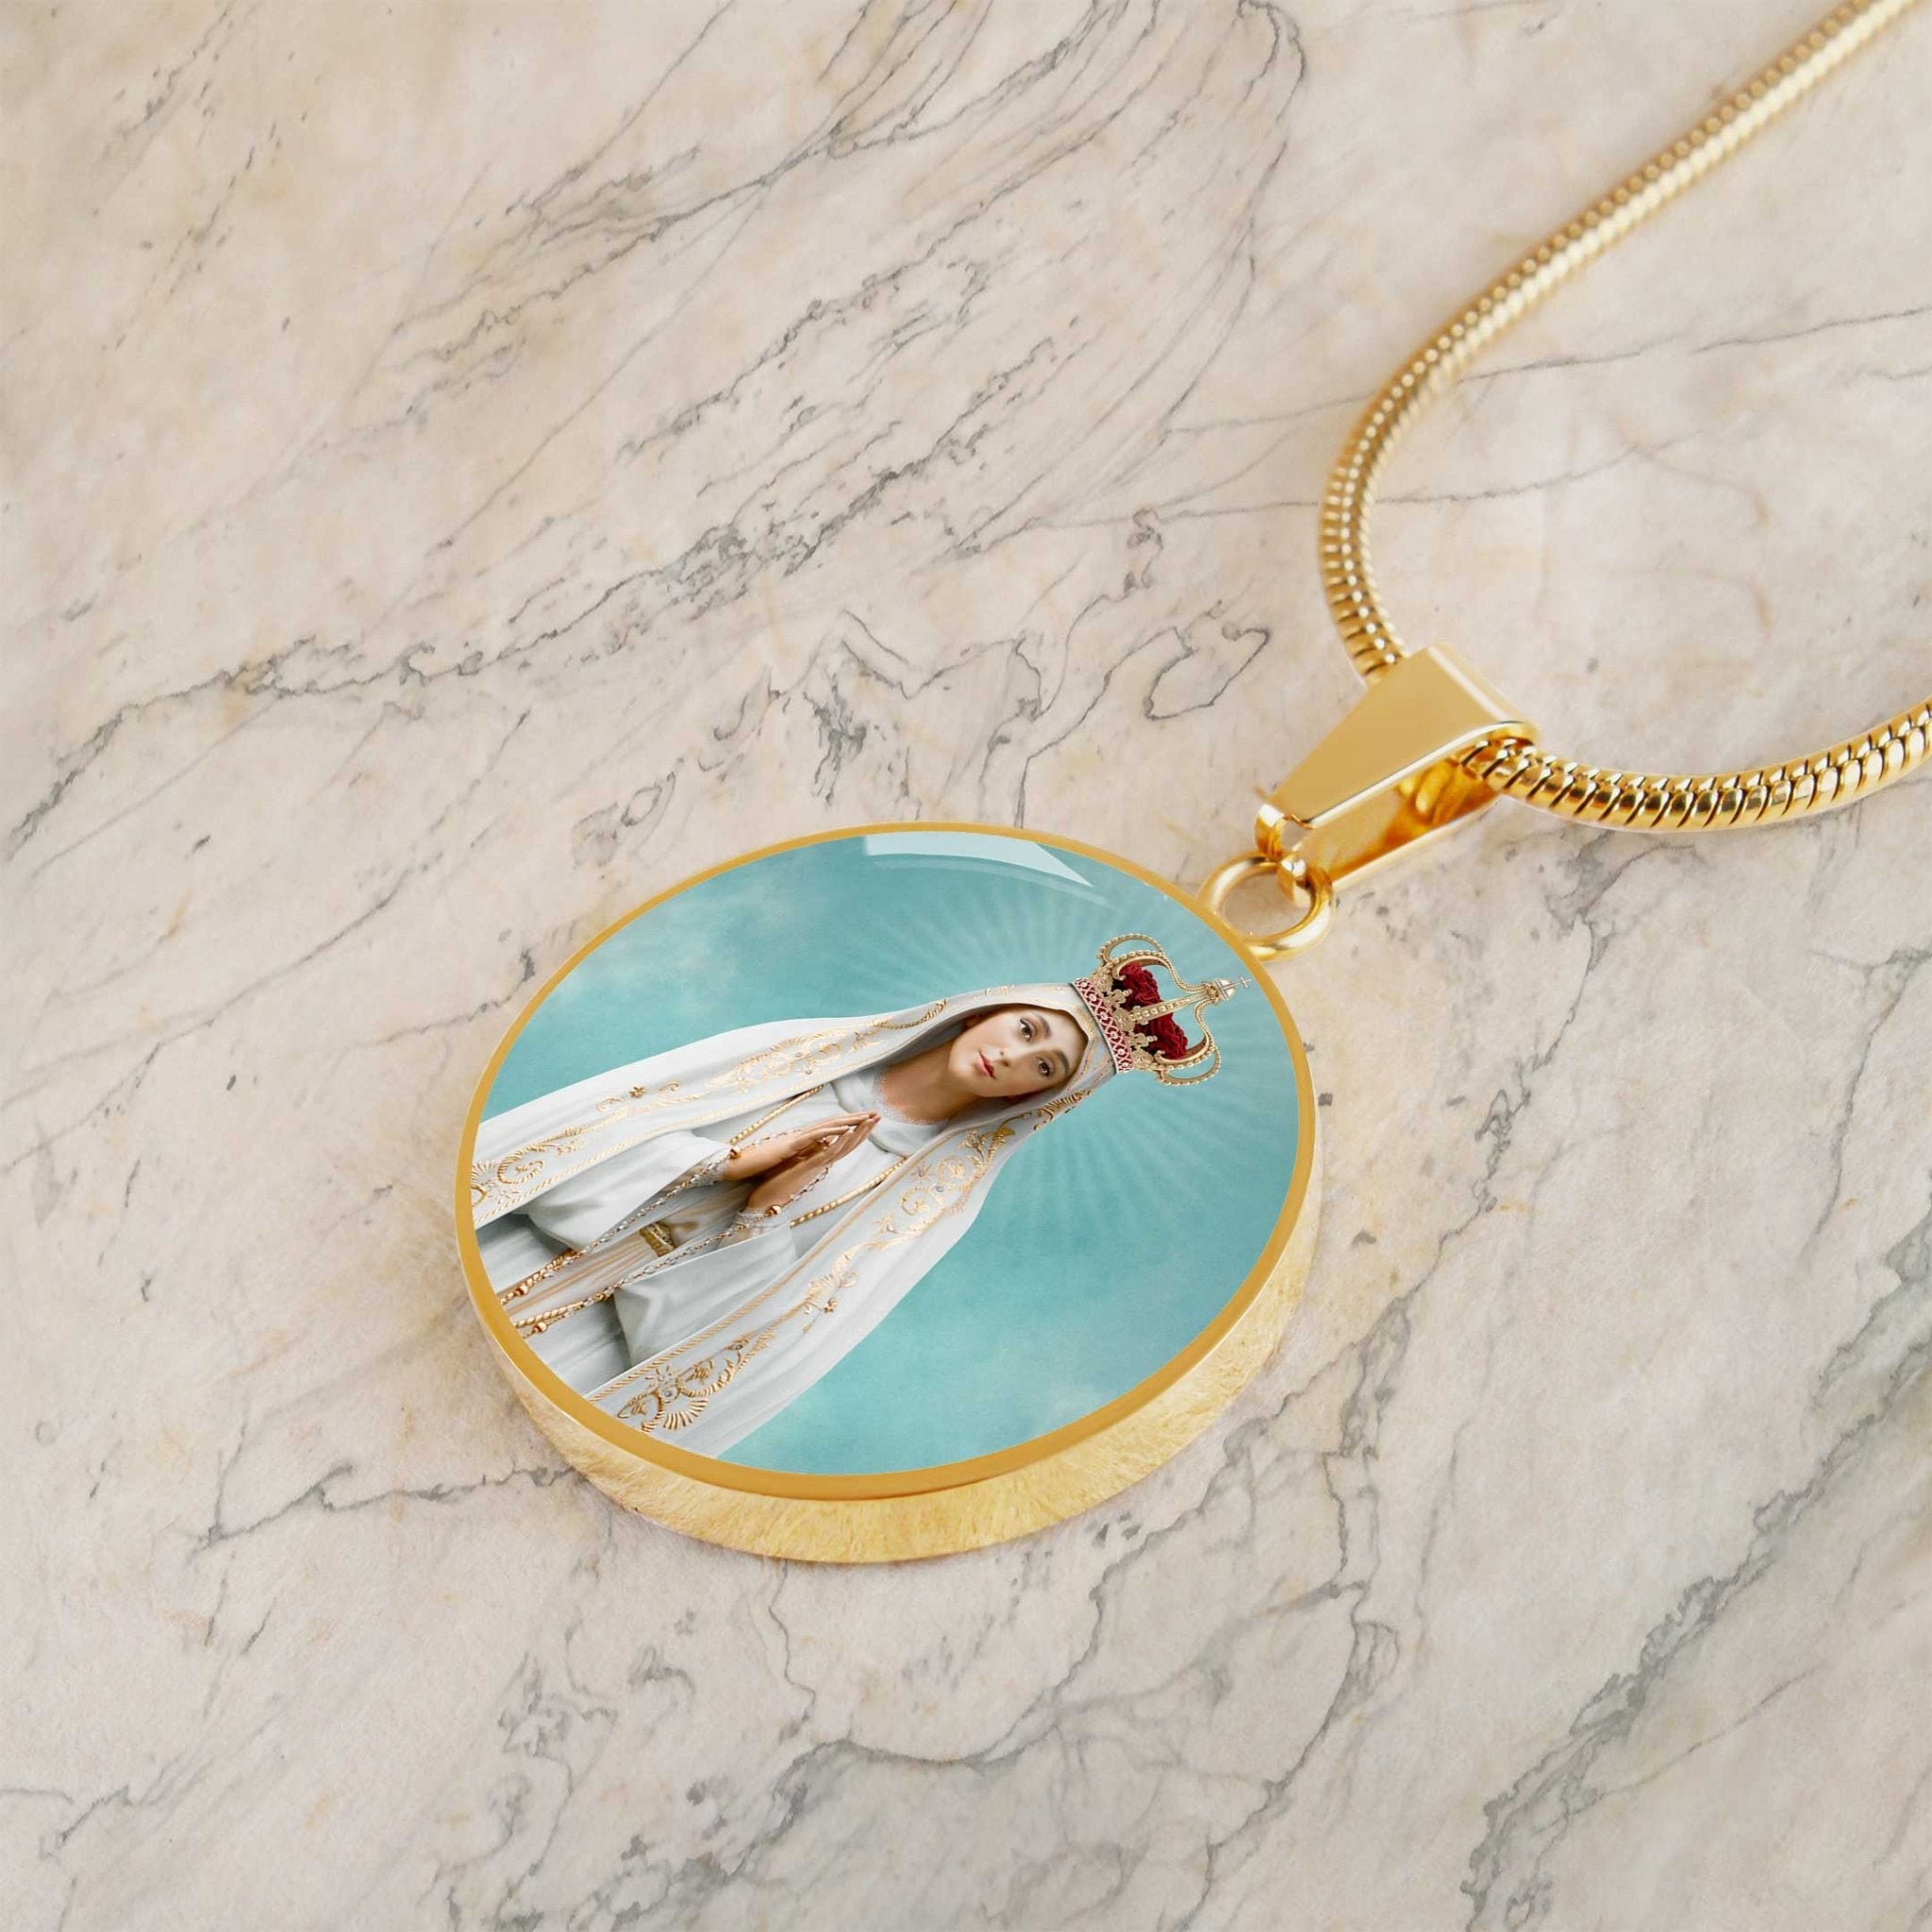 Our Lady of Fatima Pendant Necklace - VENXARA®